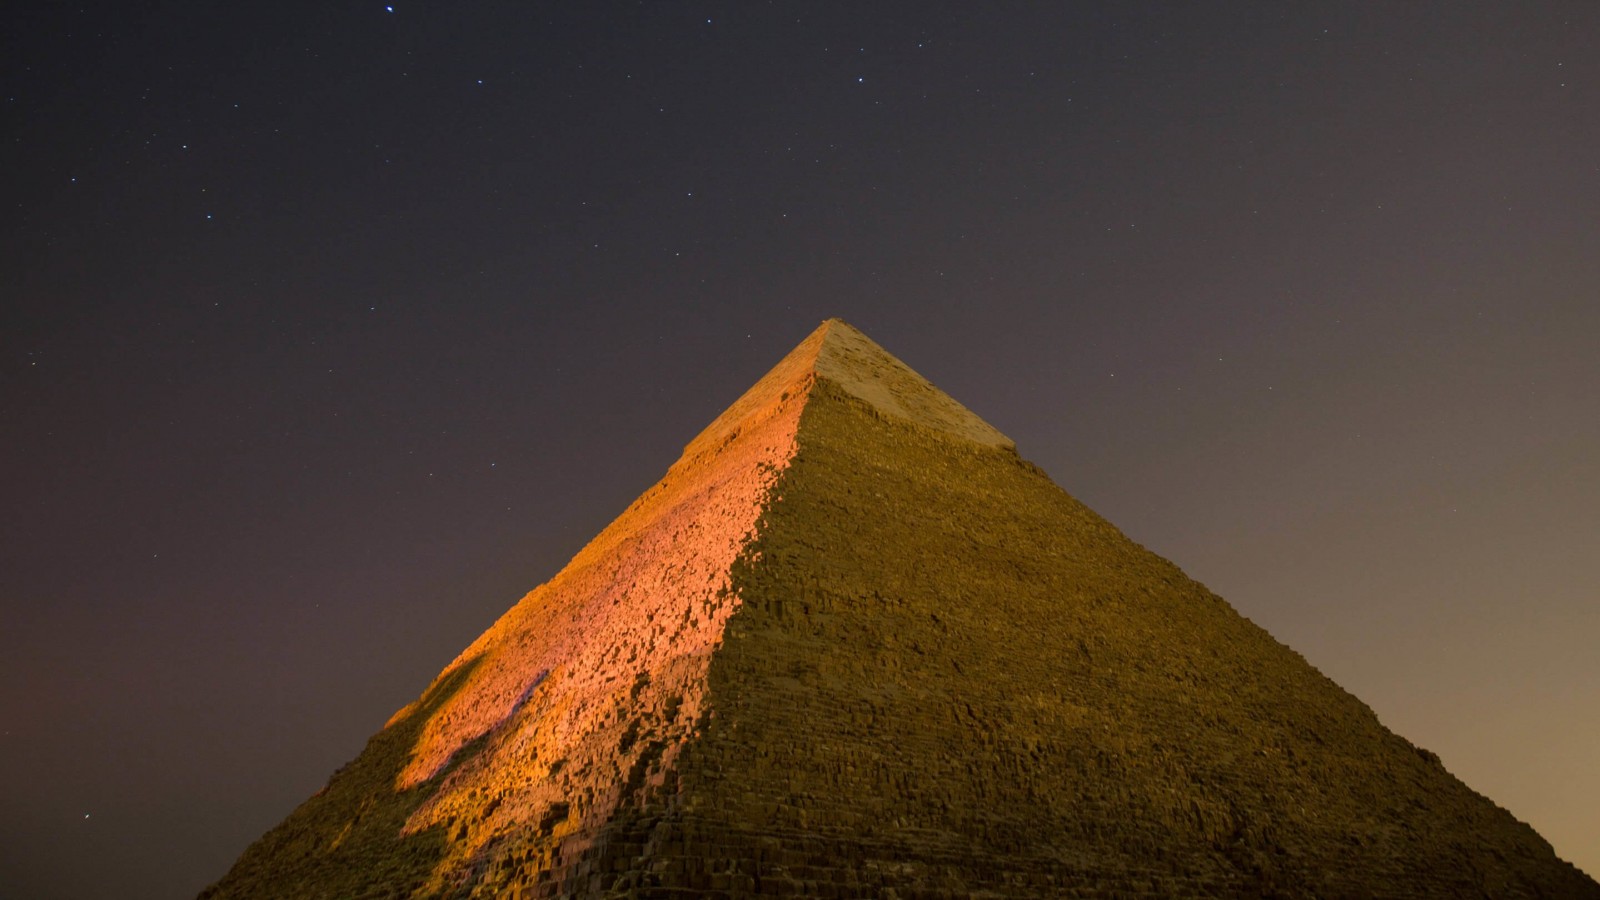 Pyramid by Night Wallpaper for Desktop 1600x900